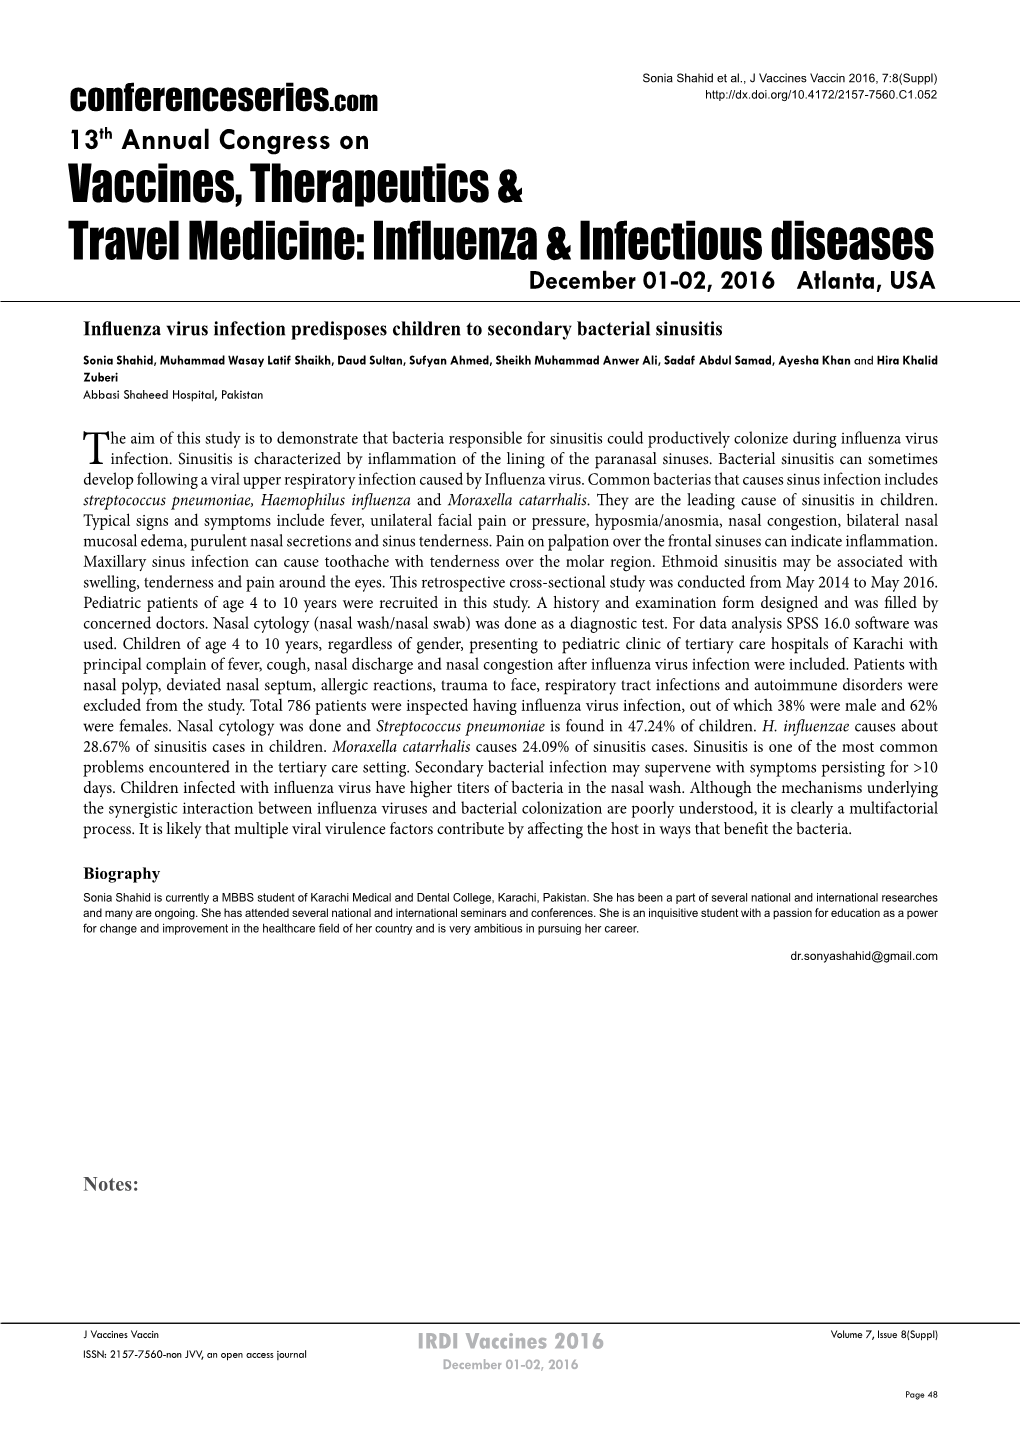 Influenza & Infectious Diseases